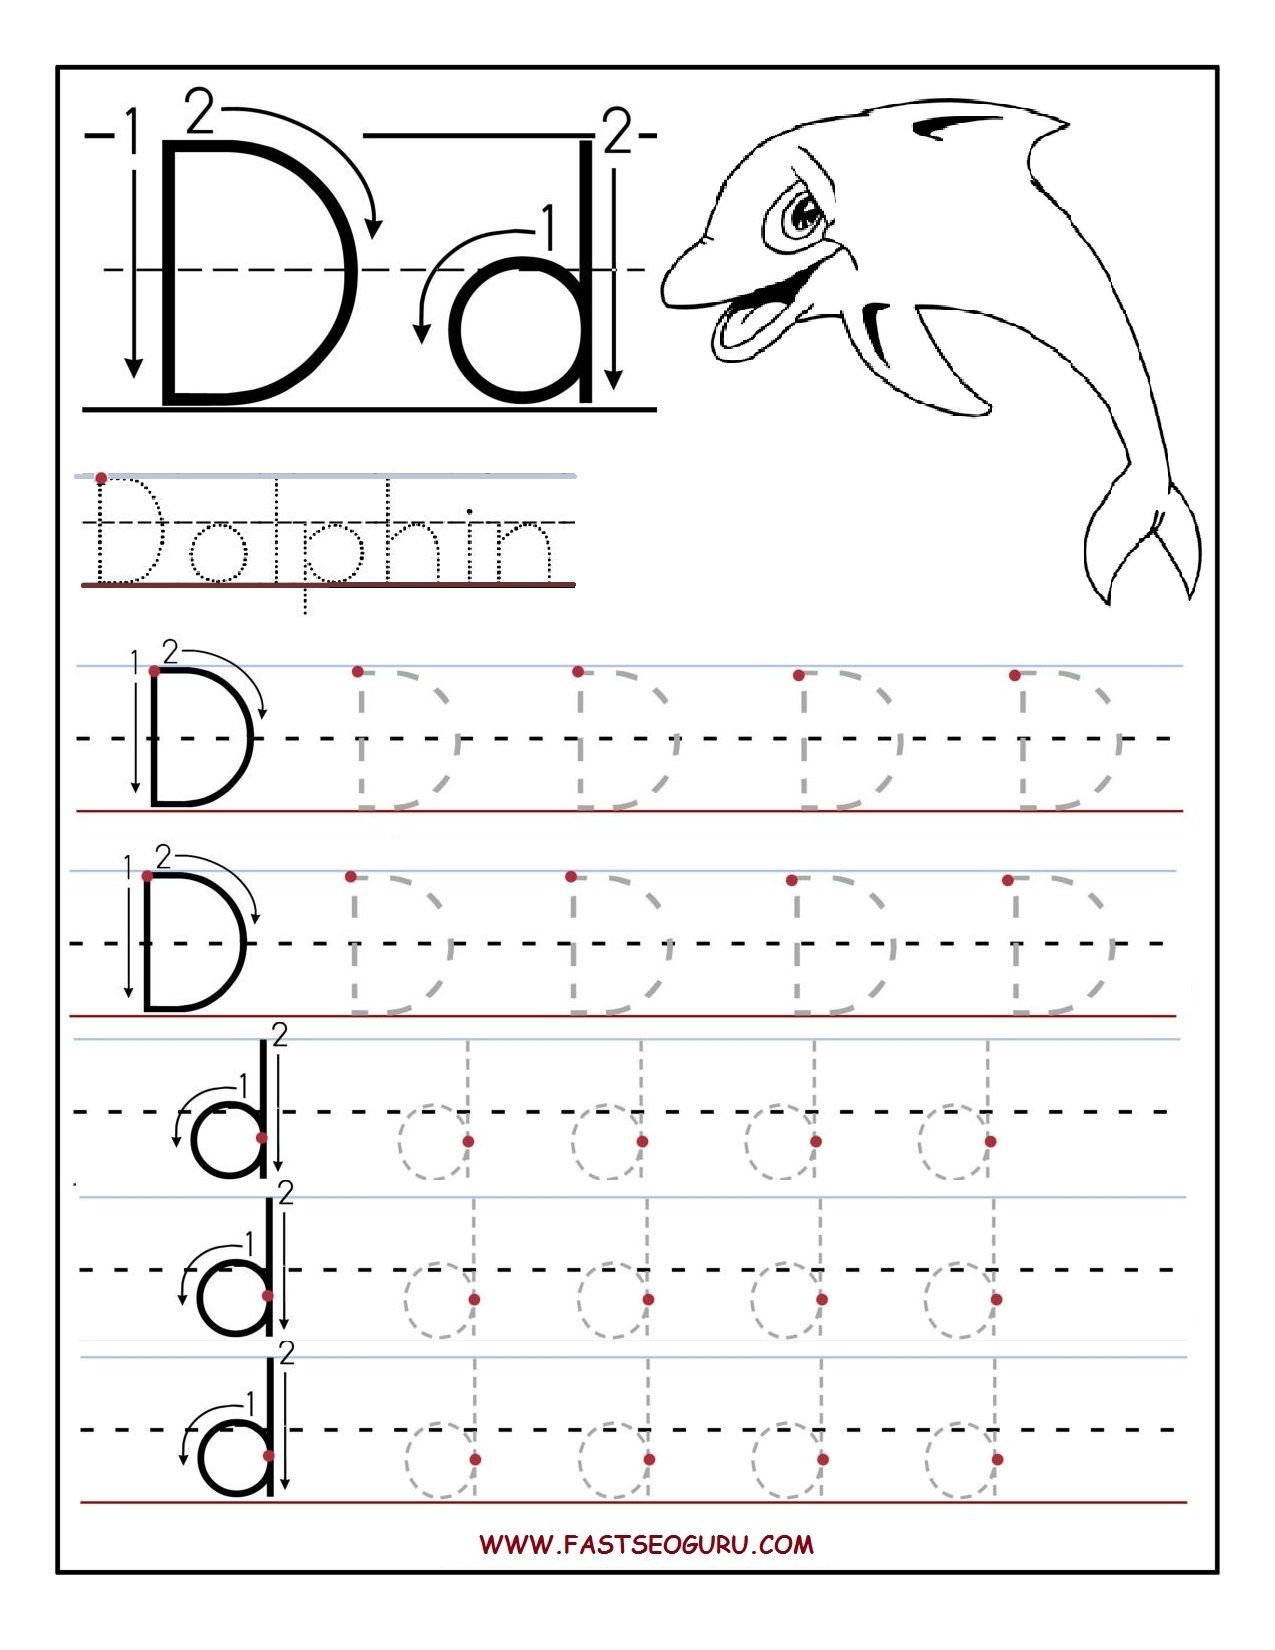 Printable Letter D Tracing Worksheets For Preschool 9A1 Alphabet